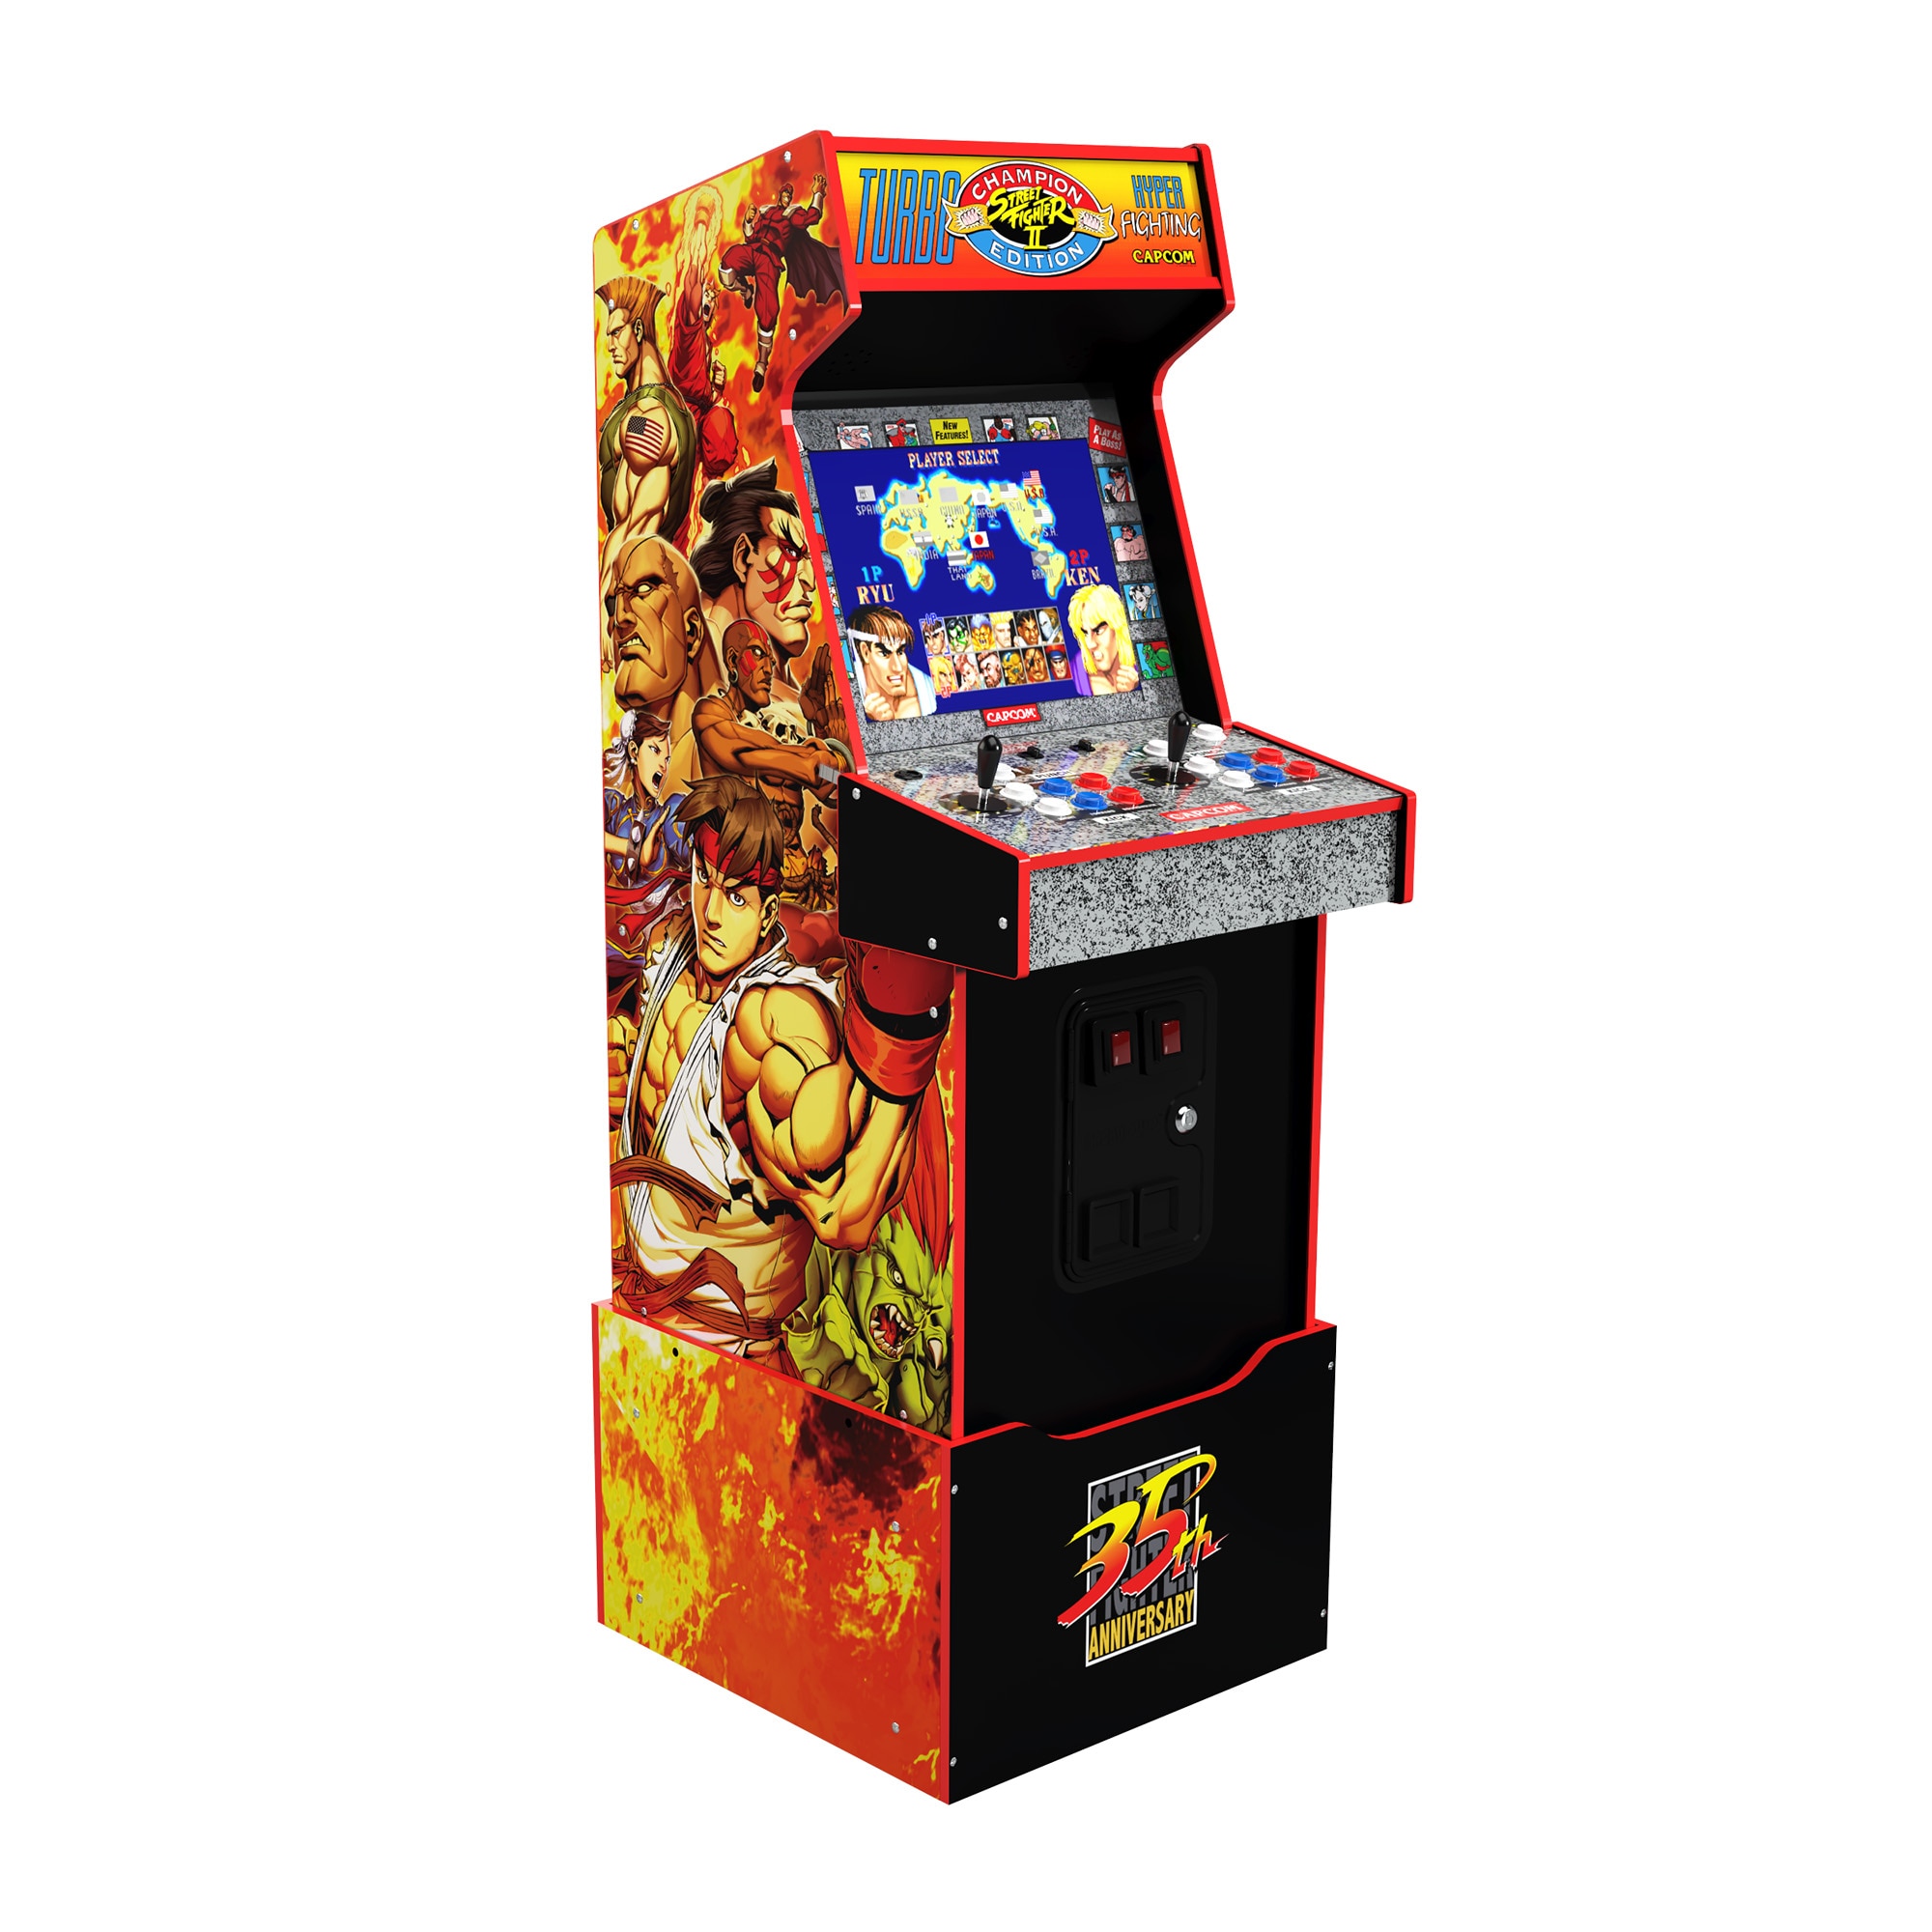 Arcade1Up Official (@arcade_1up) / X